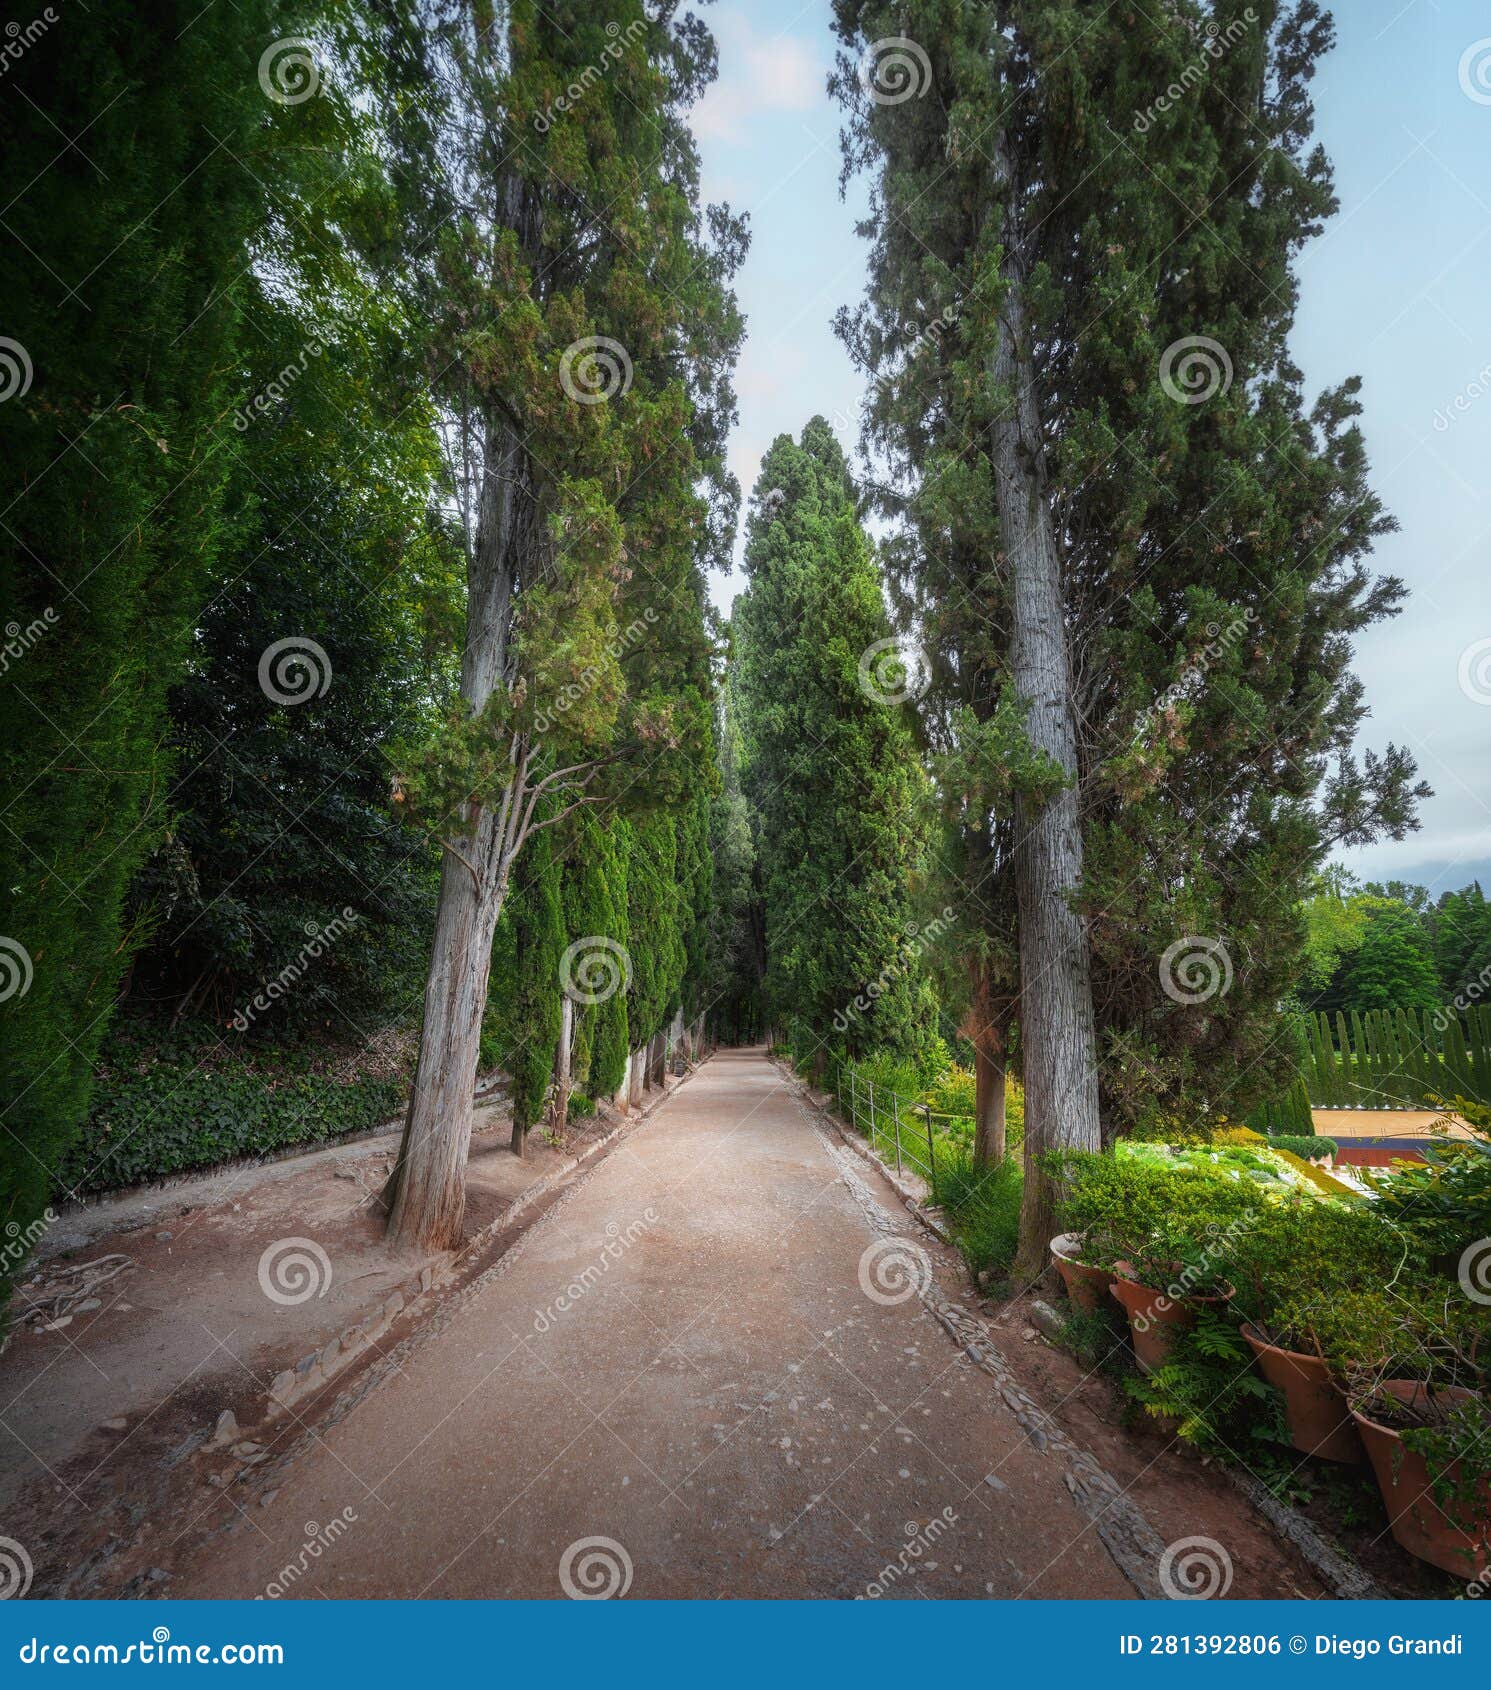 walk of the cypress trees at generalife gardens of alhambra - granada, andalusia, spain